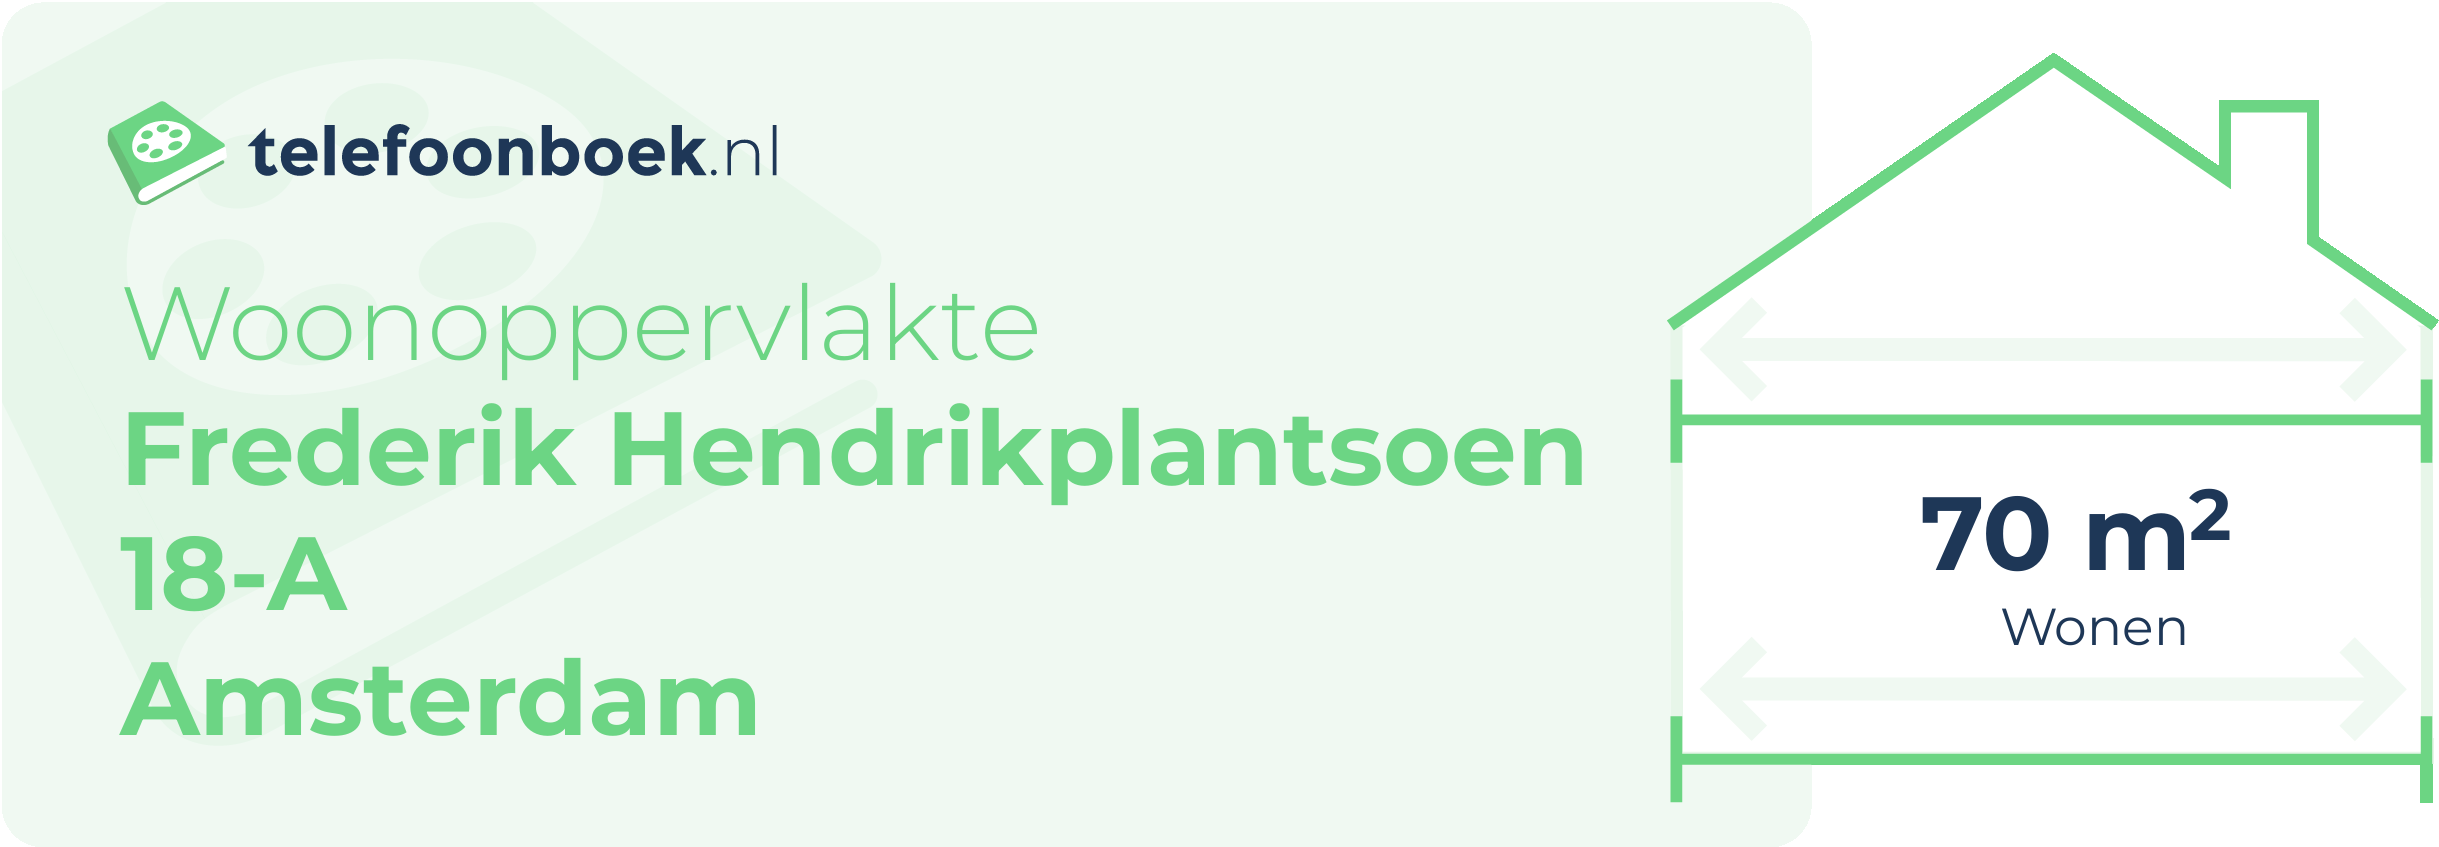 Woonoppervlakte Frederik Hendrikplantsoen 18-A Amsterdam